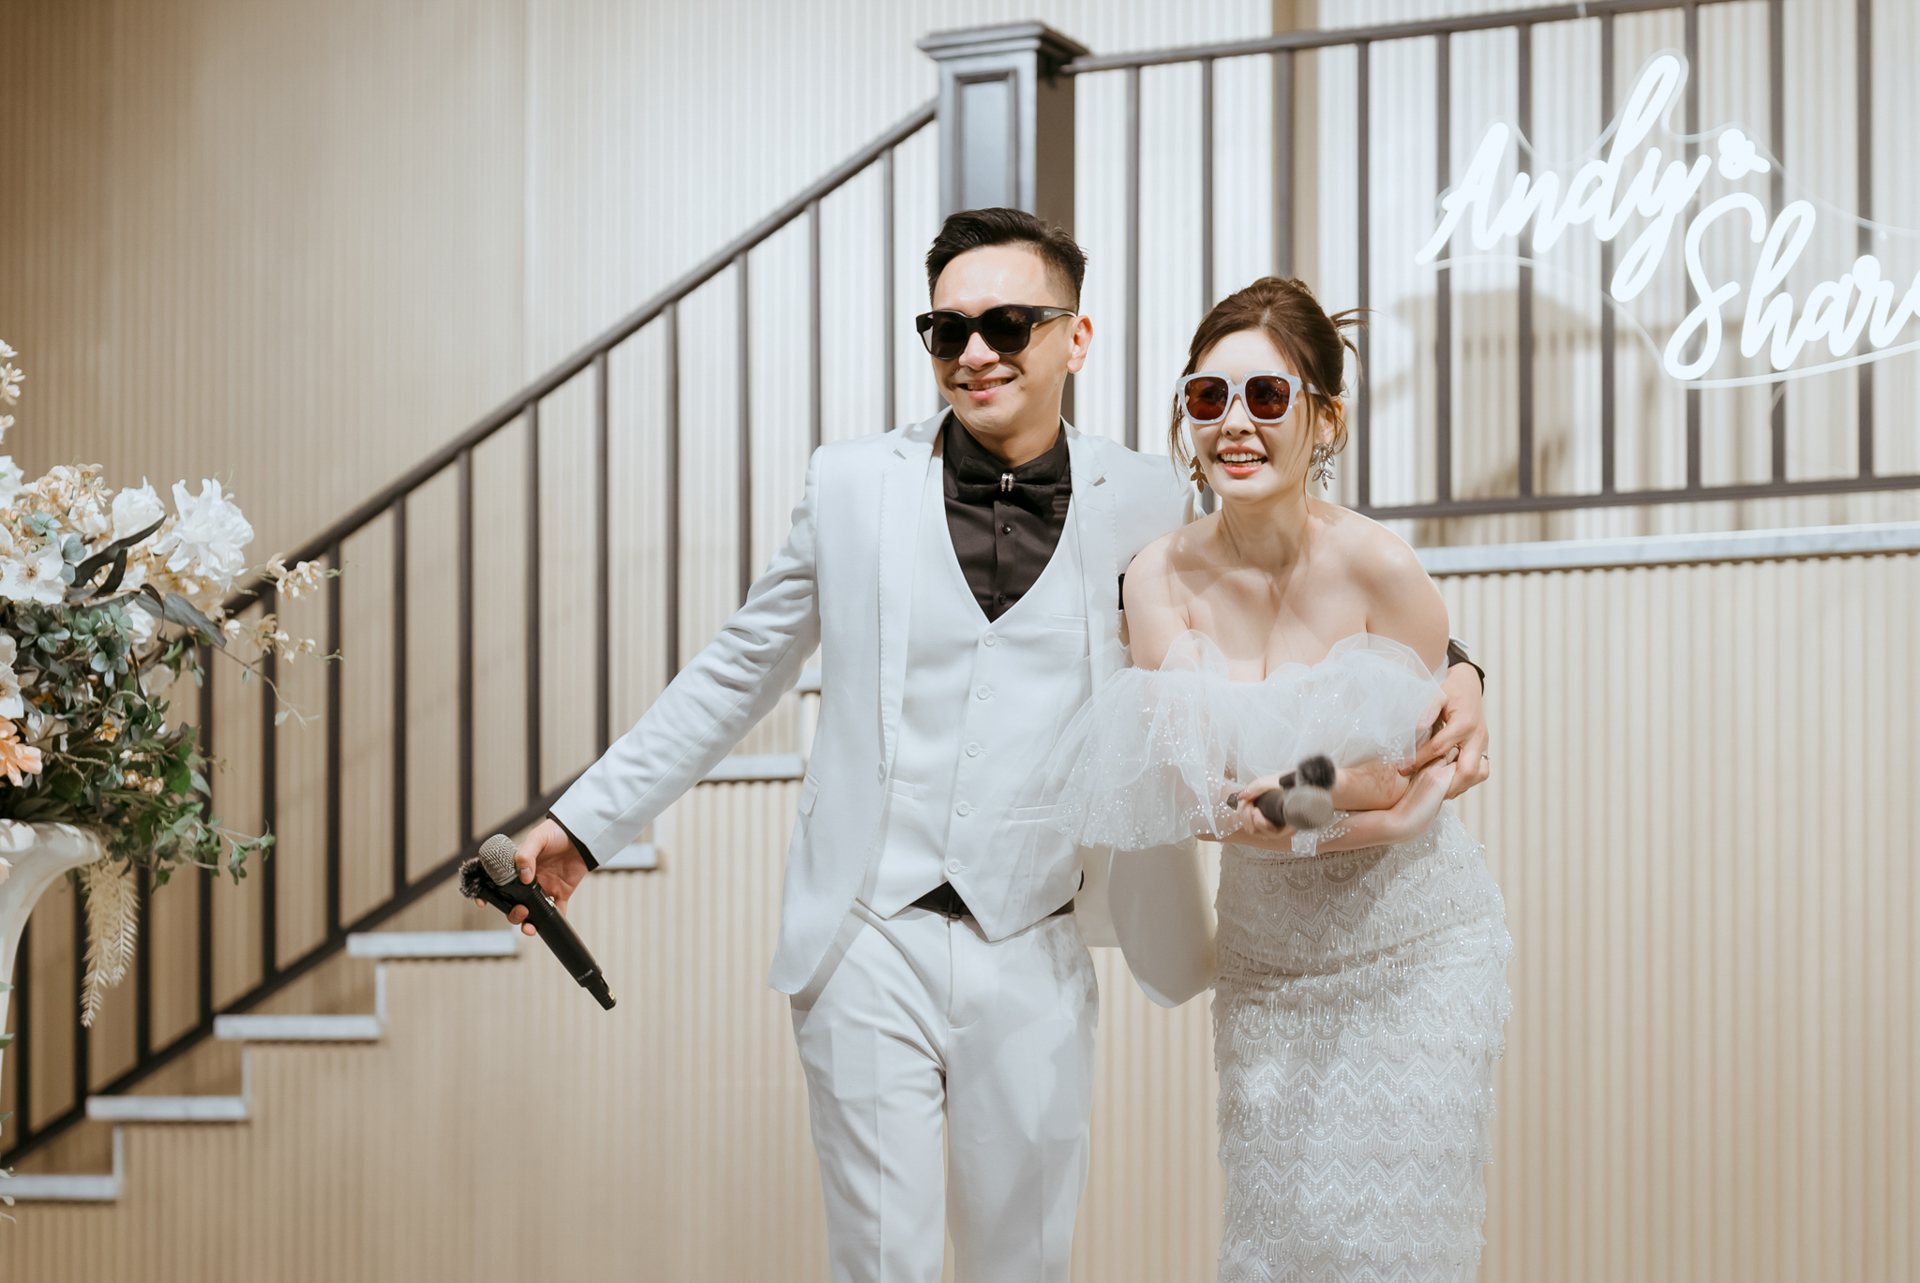 SJwedding鯊魚婚紗婚攝團隊Wesley在萊特薇庭高雄館拍攝的婚禮紀錄